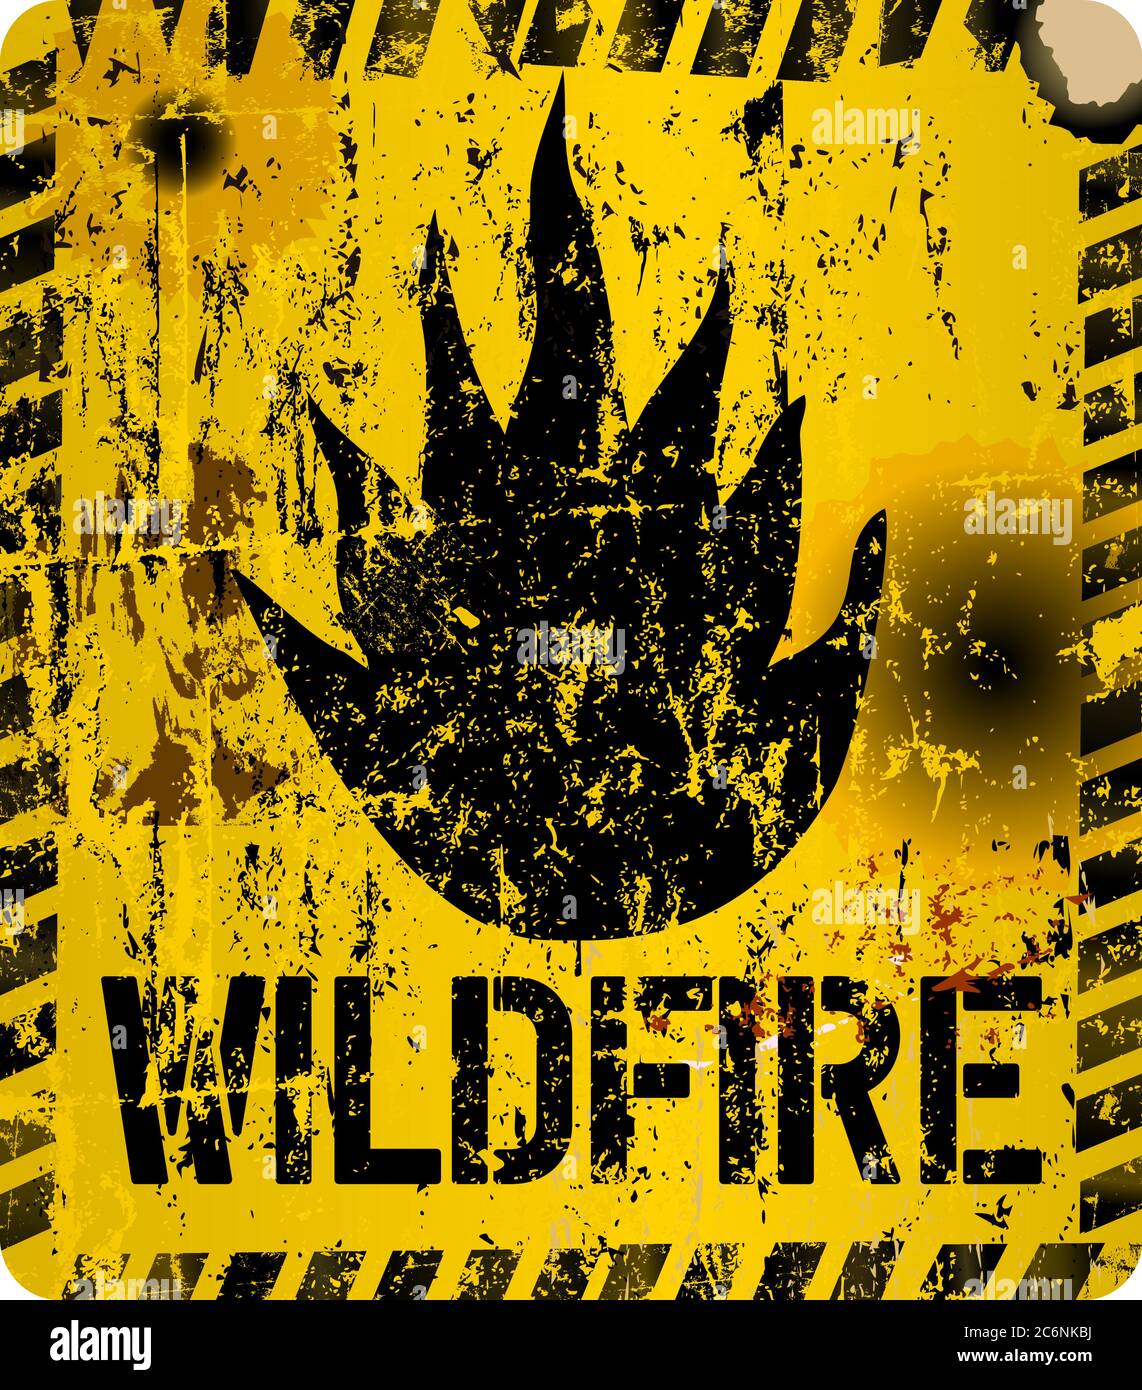 wildfire, bush fire warning sign, grunge style vector illustration Stock Vector